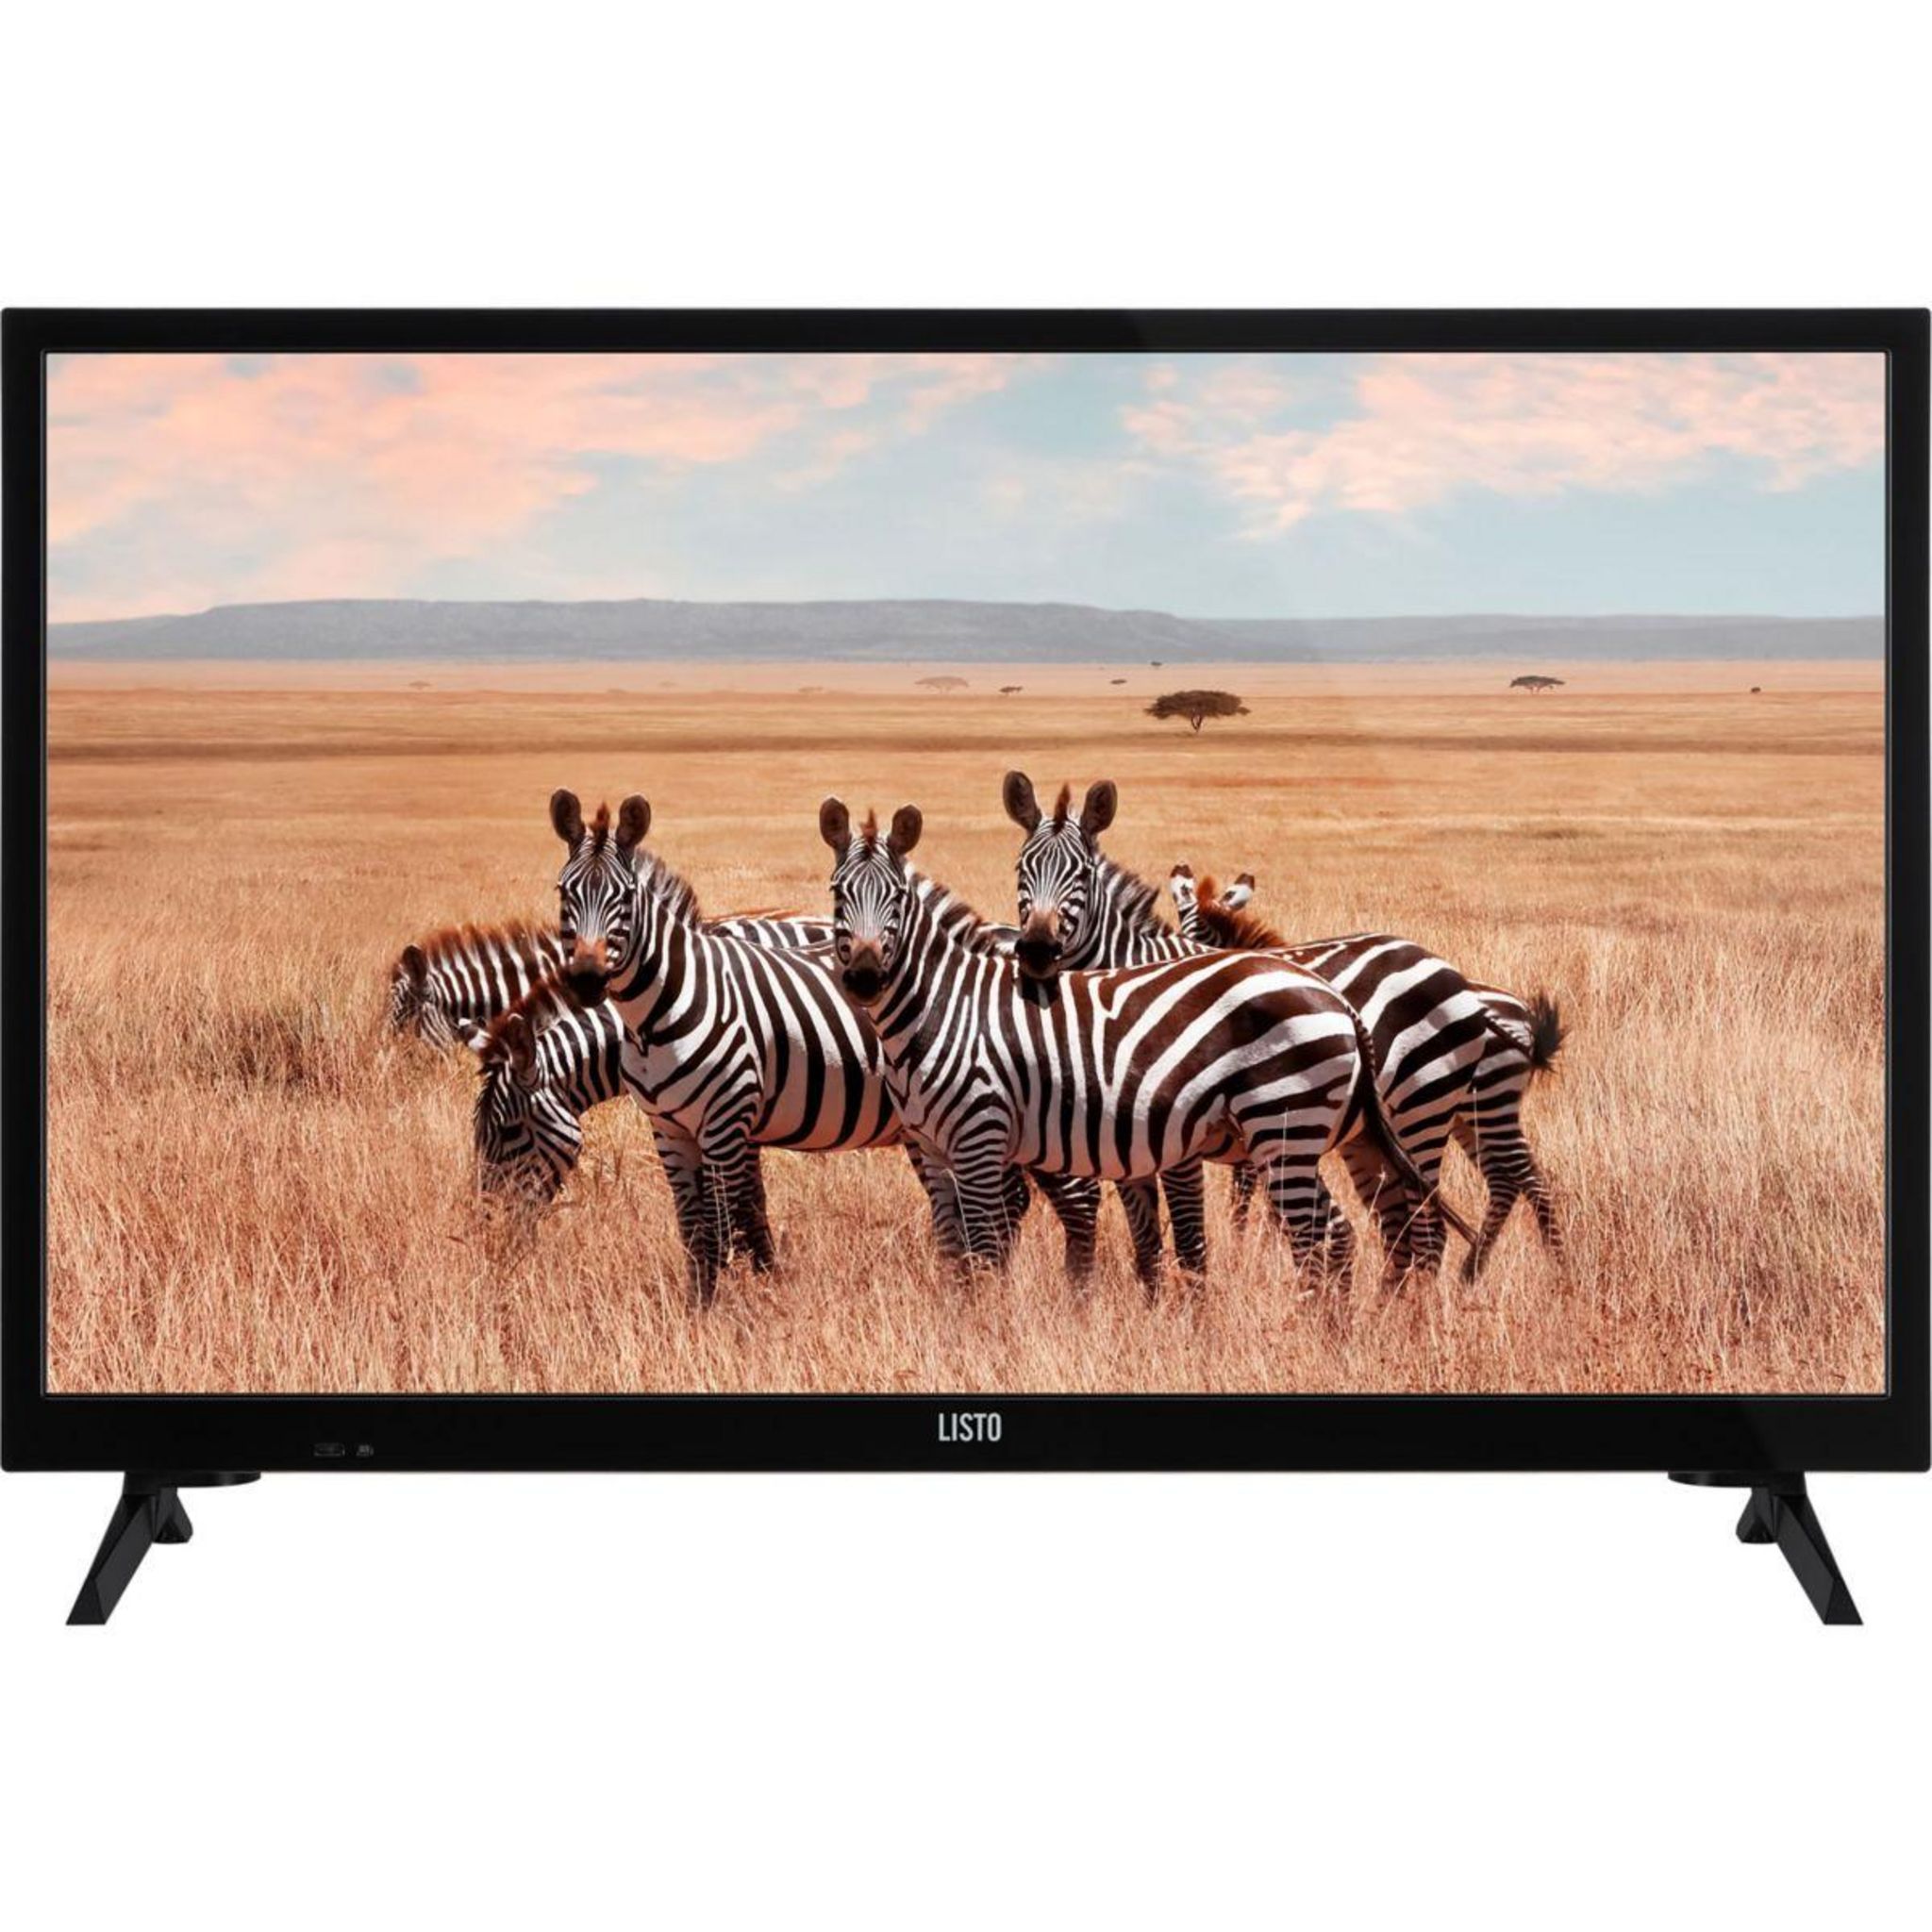 QILIVE Q40FS232B TV DLED Full HD 101 cm Smart TV pas cher 